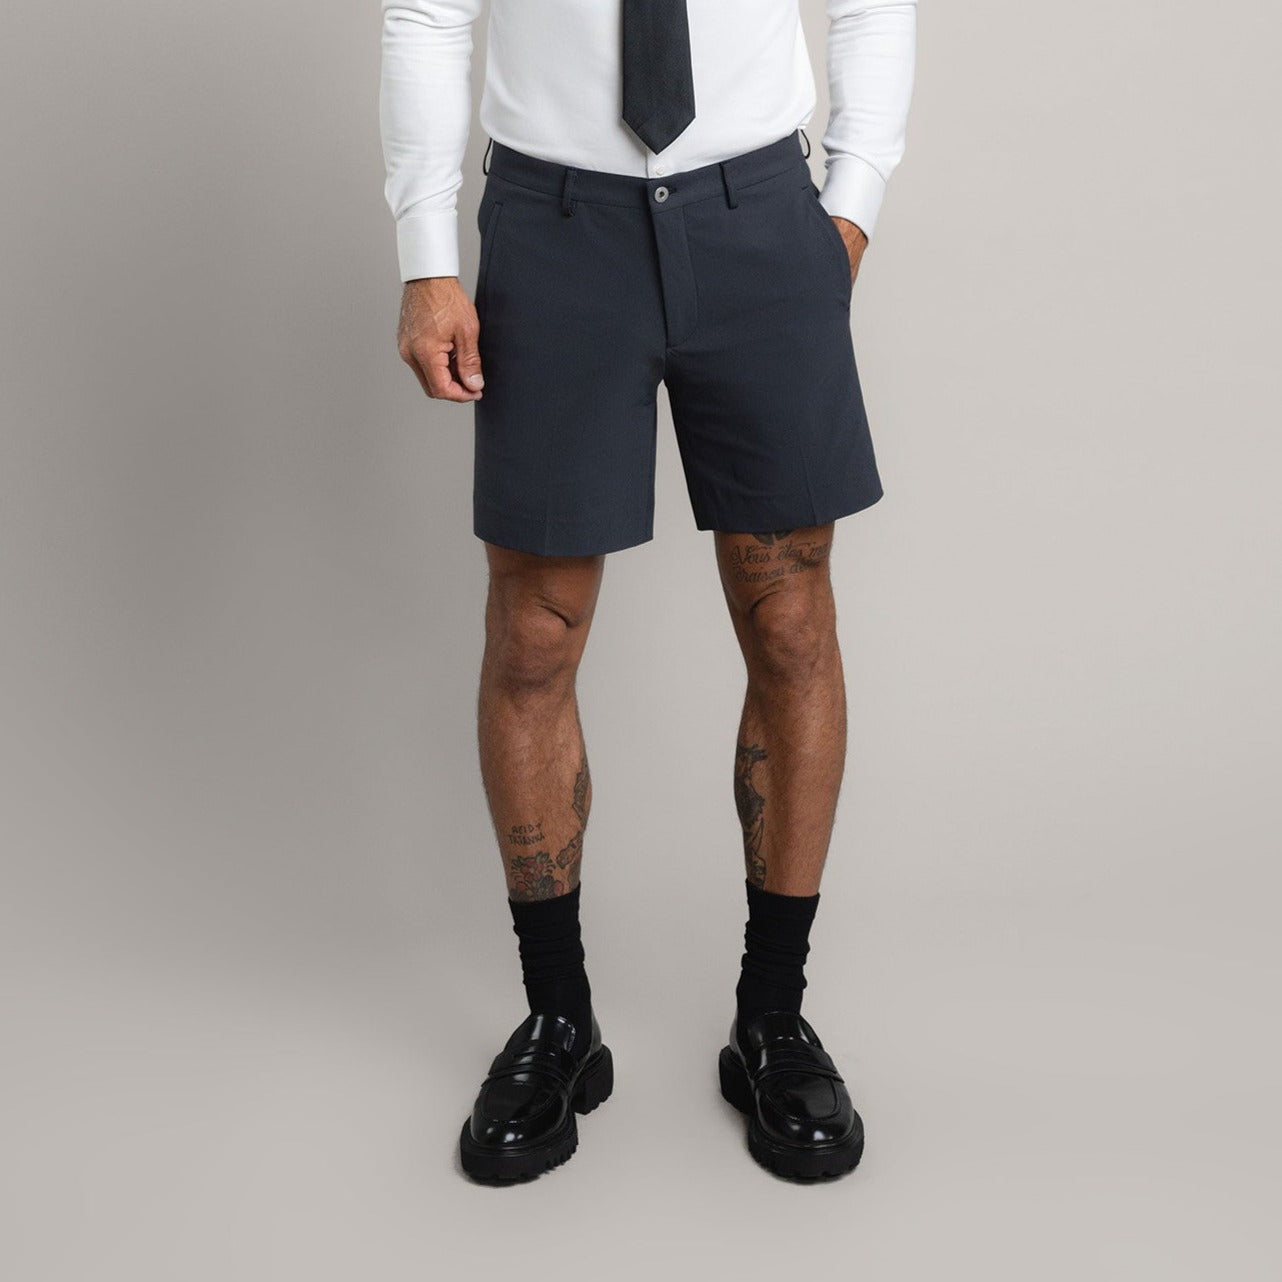 SENE - Men's Custom Shorts